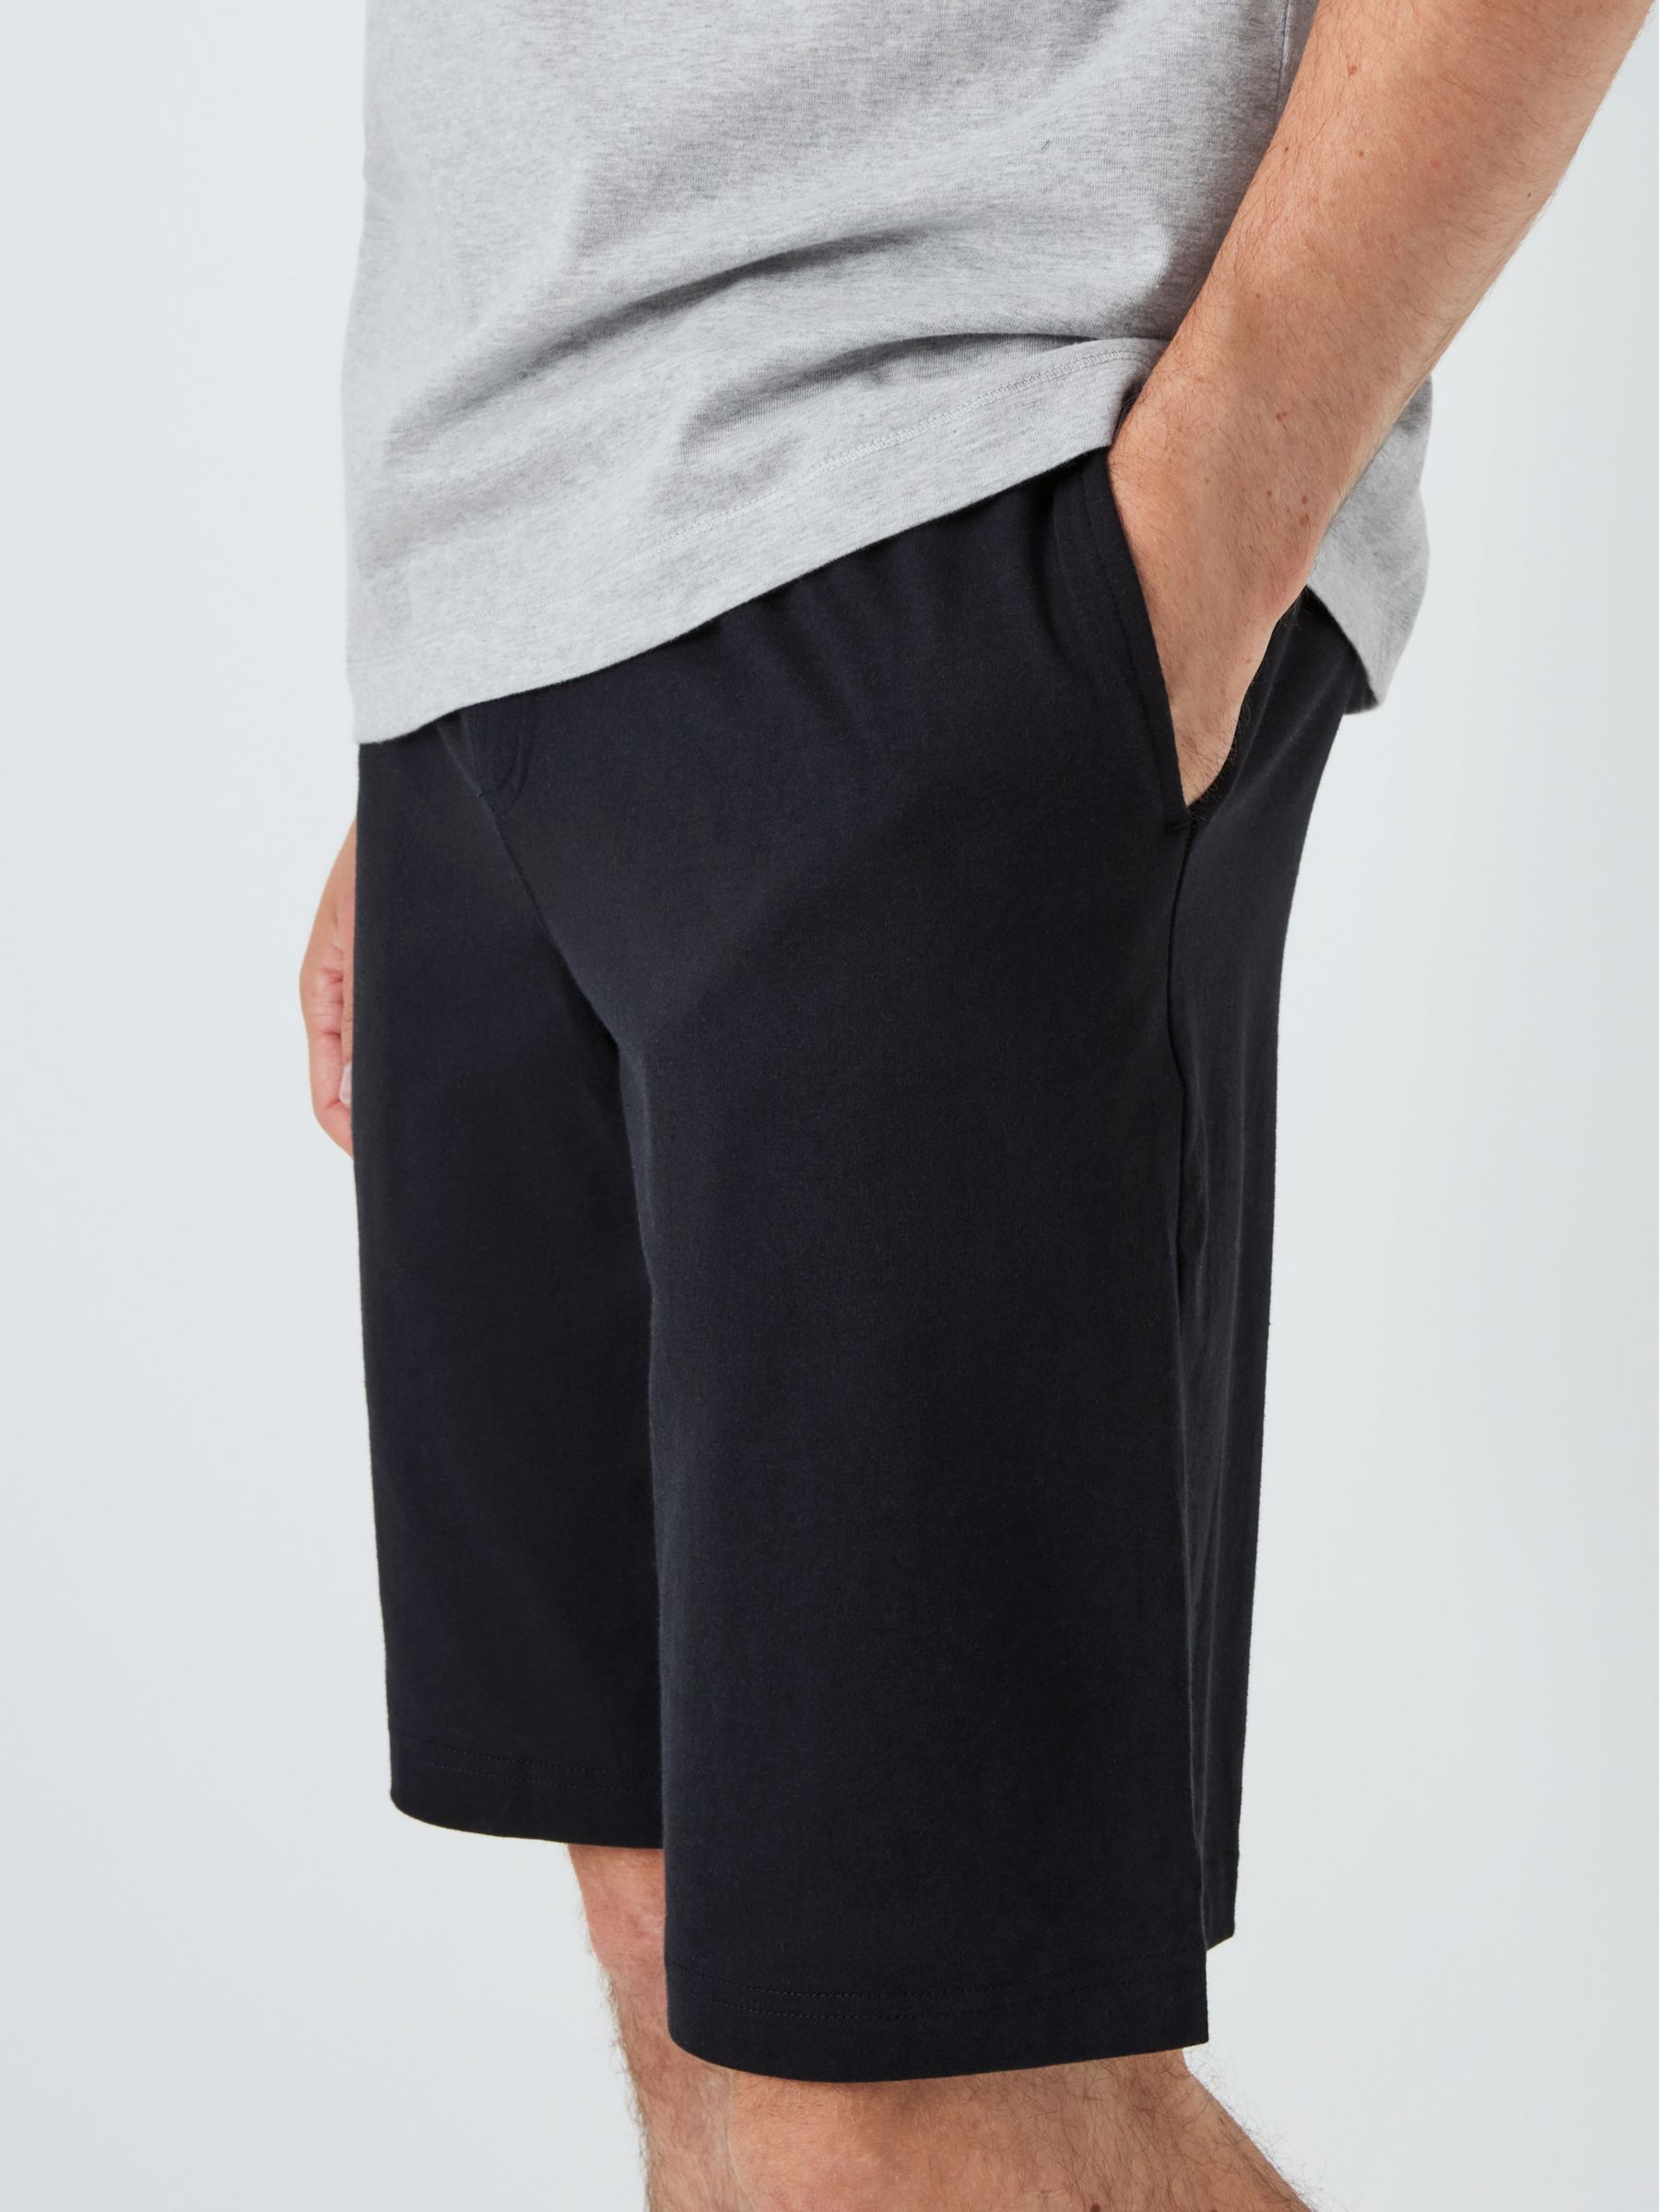 John Lewis ANYDAY Cotton Jersey T-Shirt & Shorts Pyjama Set, Black/Grey, XL